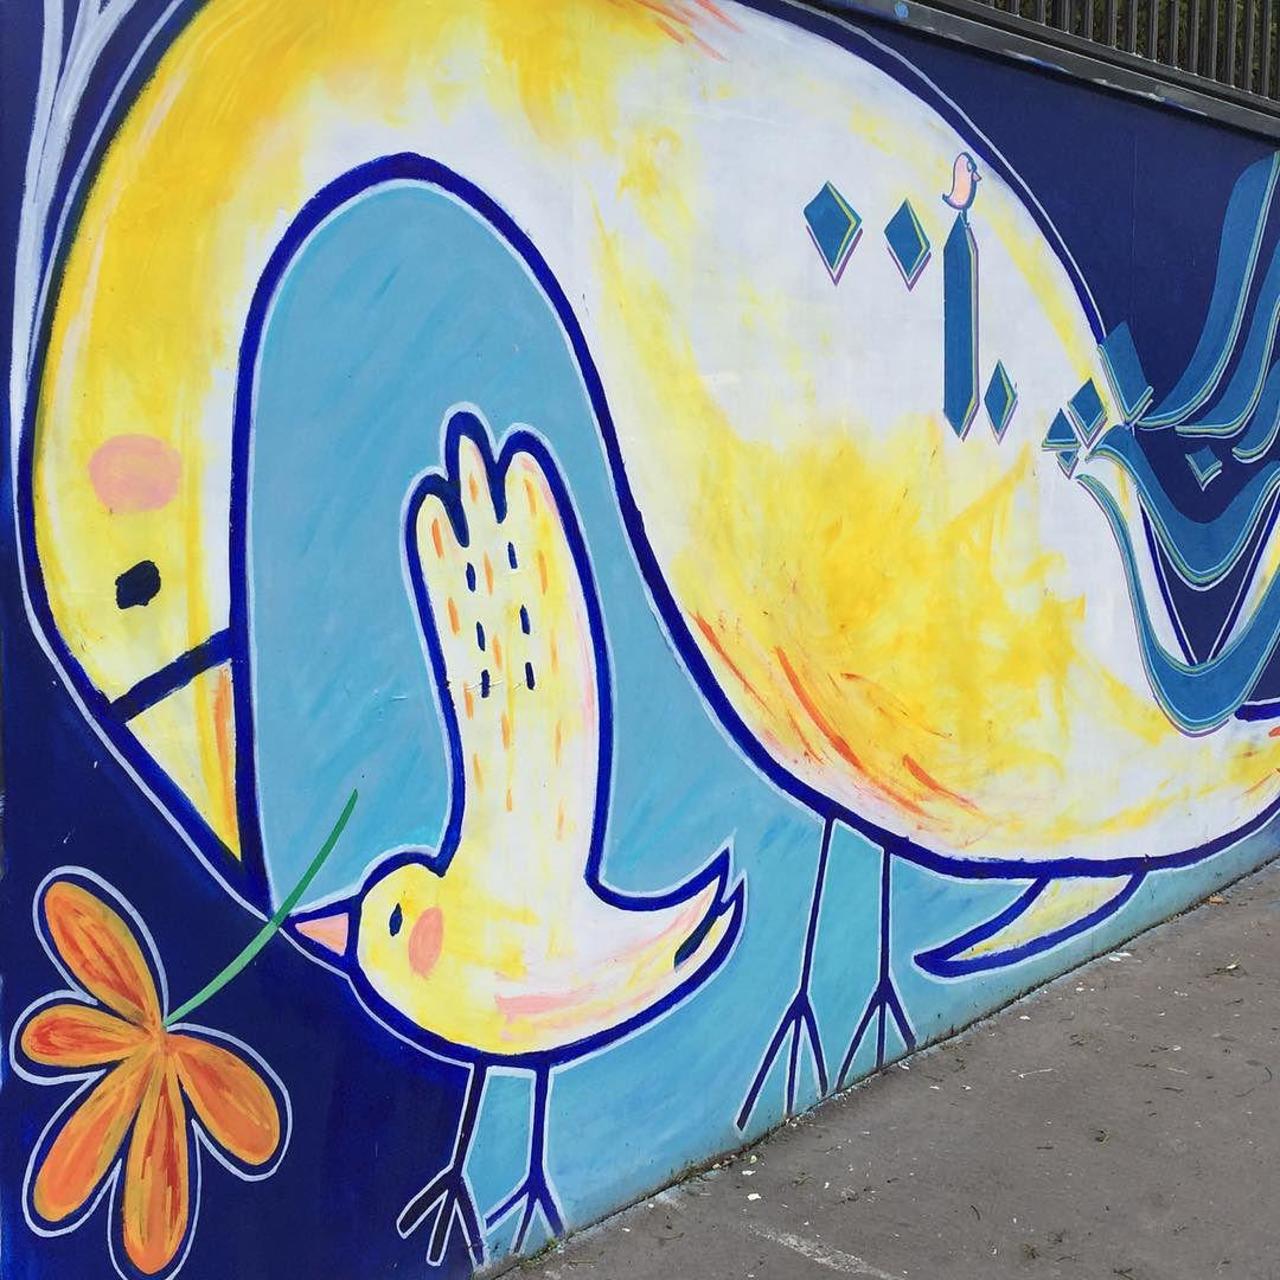 #Paris #graffiti photo by @catscoffeecreativity http://ift.tt/1NGEhIl #StreetArt http://t.co/G7tcoDxmcA